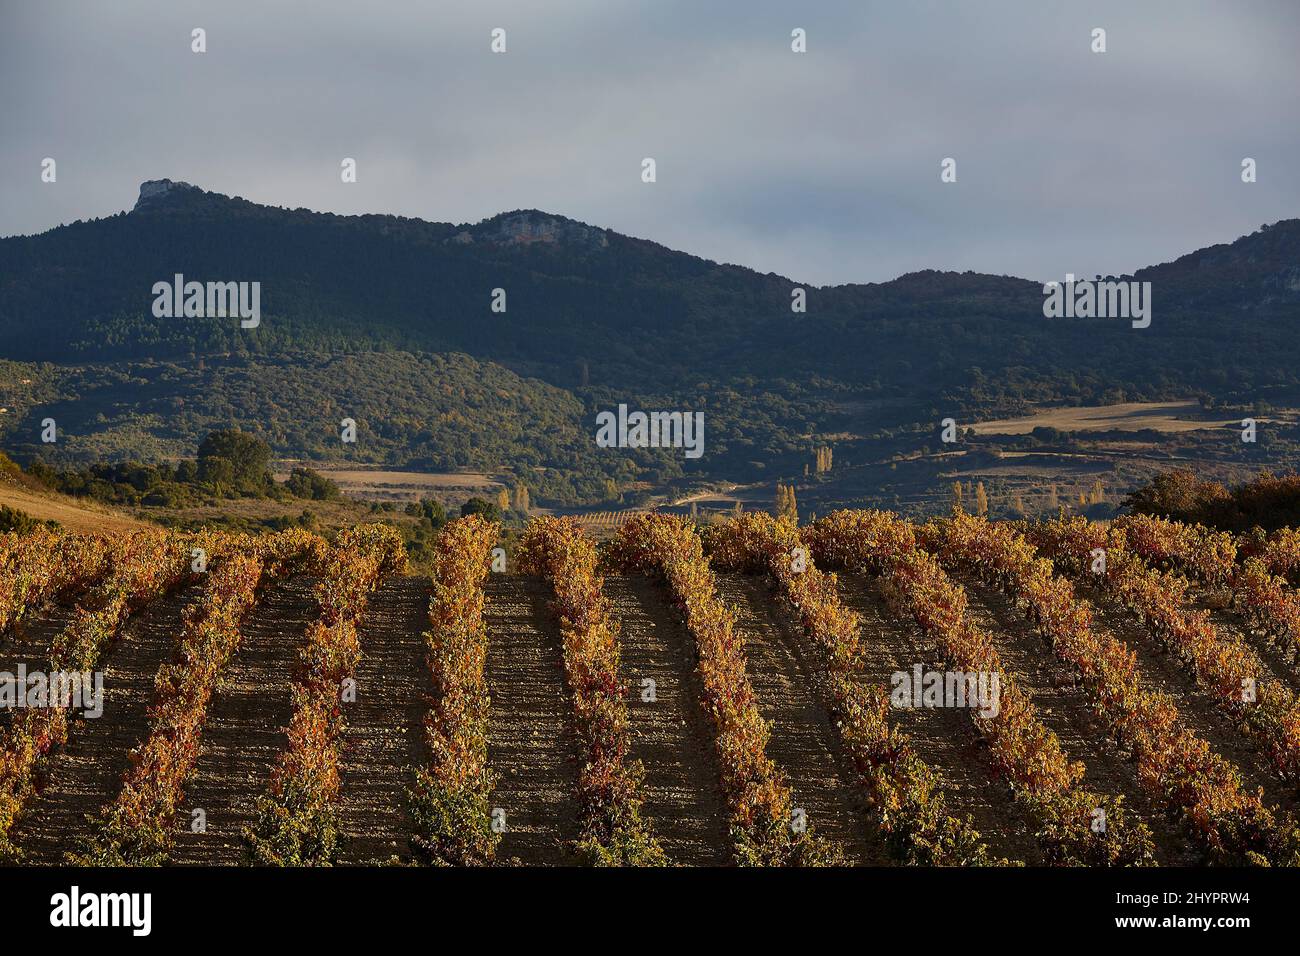 26/10/21 Morgensonne auf Weinbergen, Rivas de Tereso (La Rja), Spanien. Foto von James Sturcke | sturcke.org Stockfoto